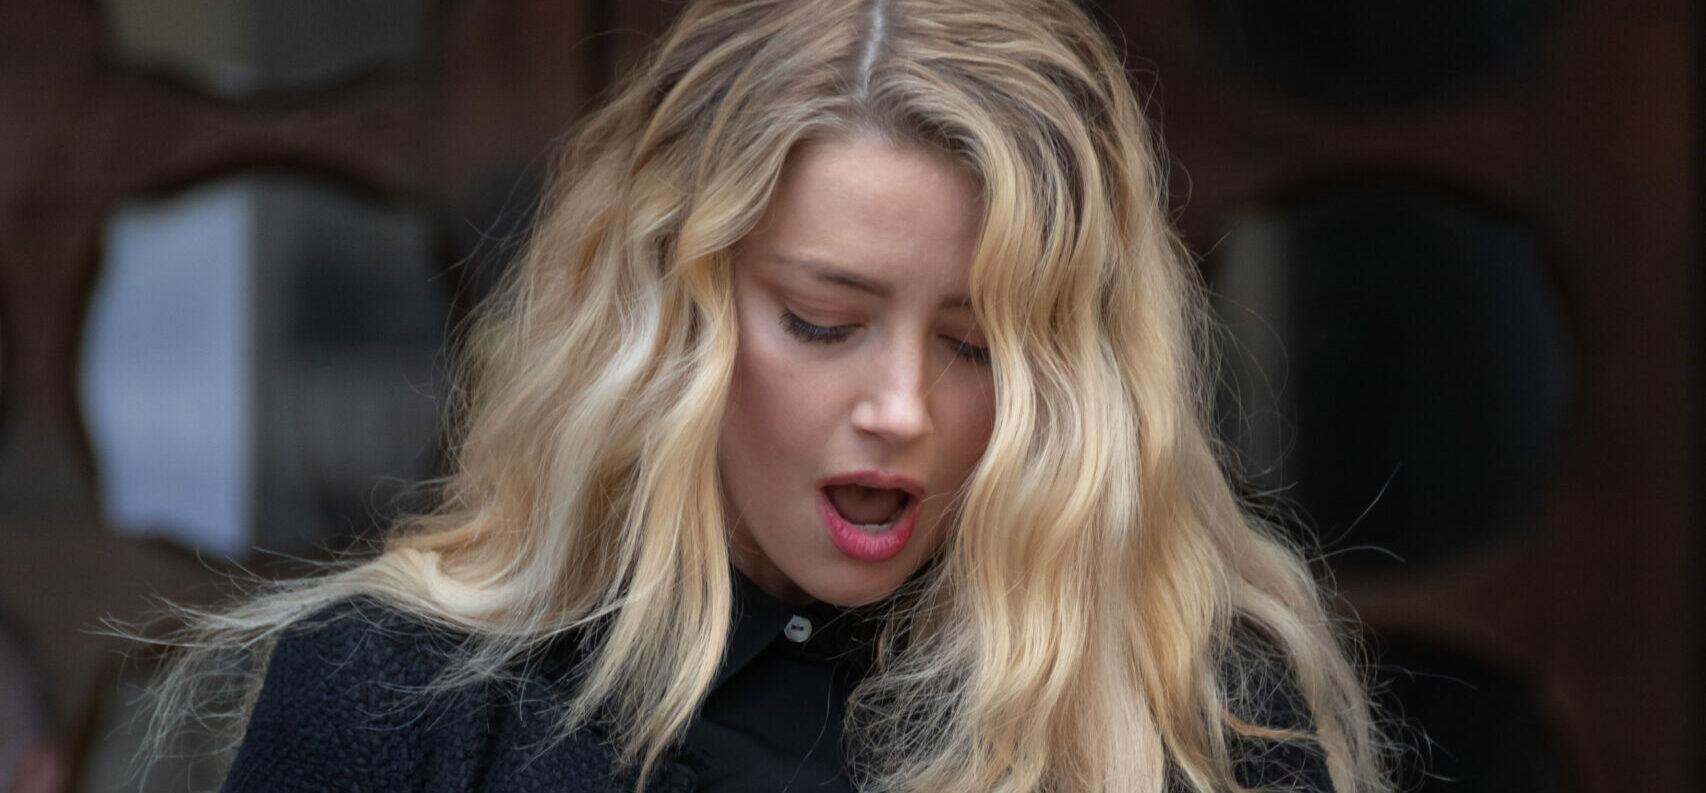 Body Language Expert: Amber Heard Testimony Conveyed 'Authenticity'